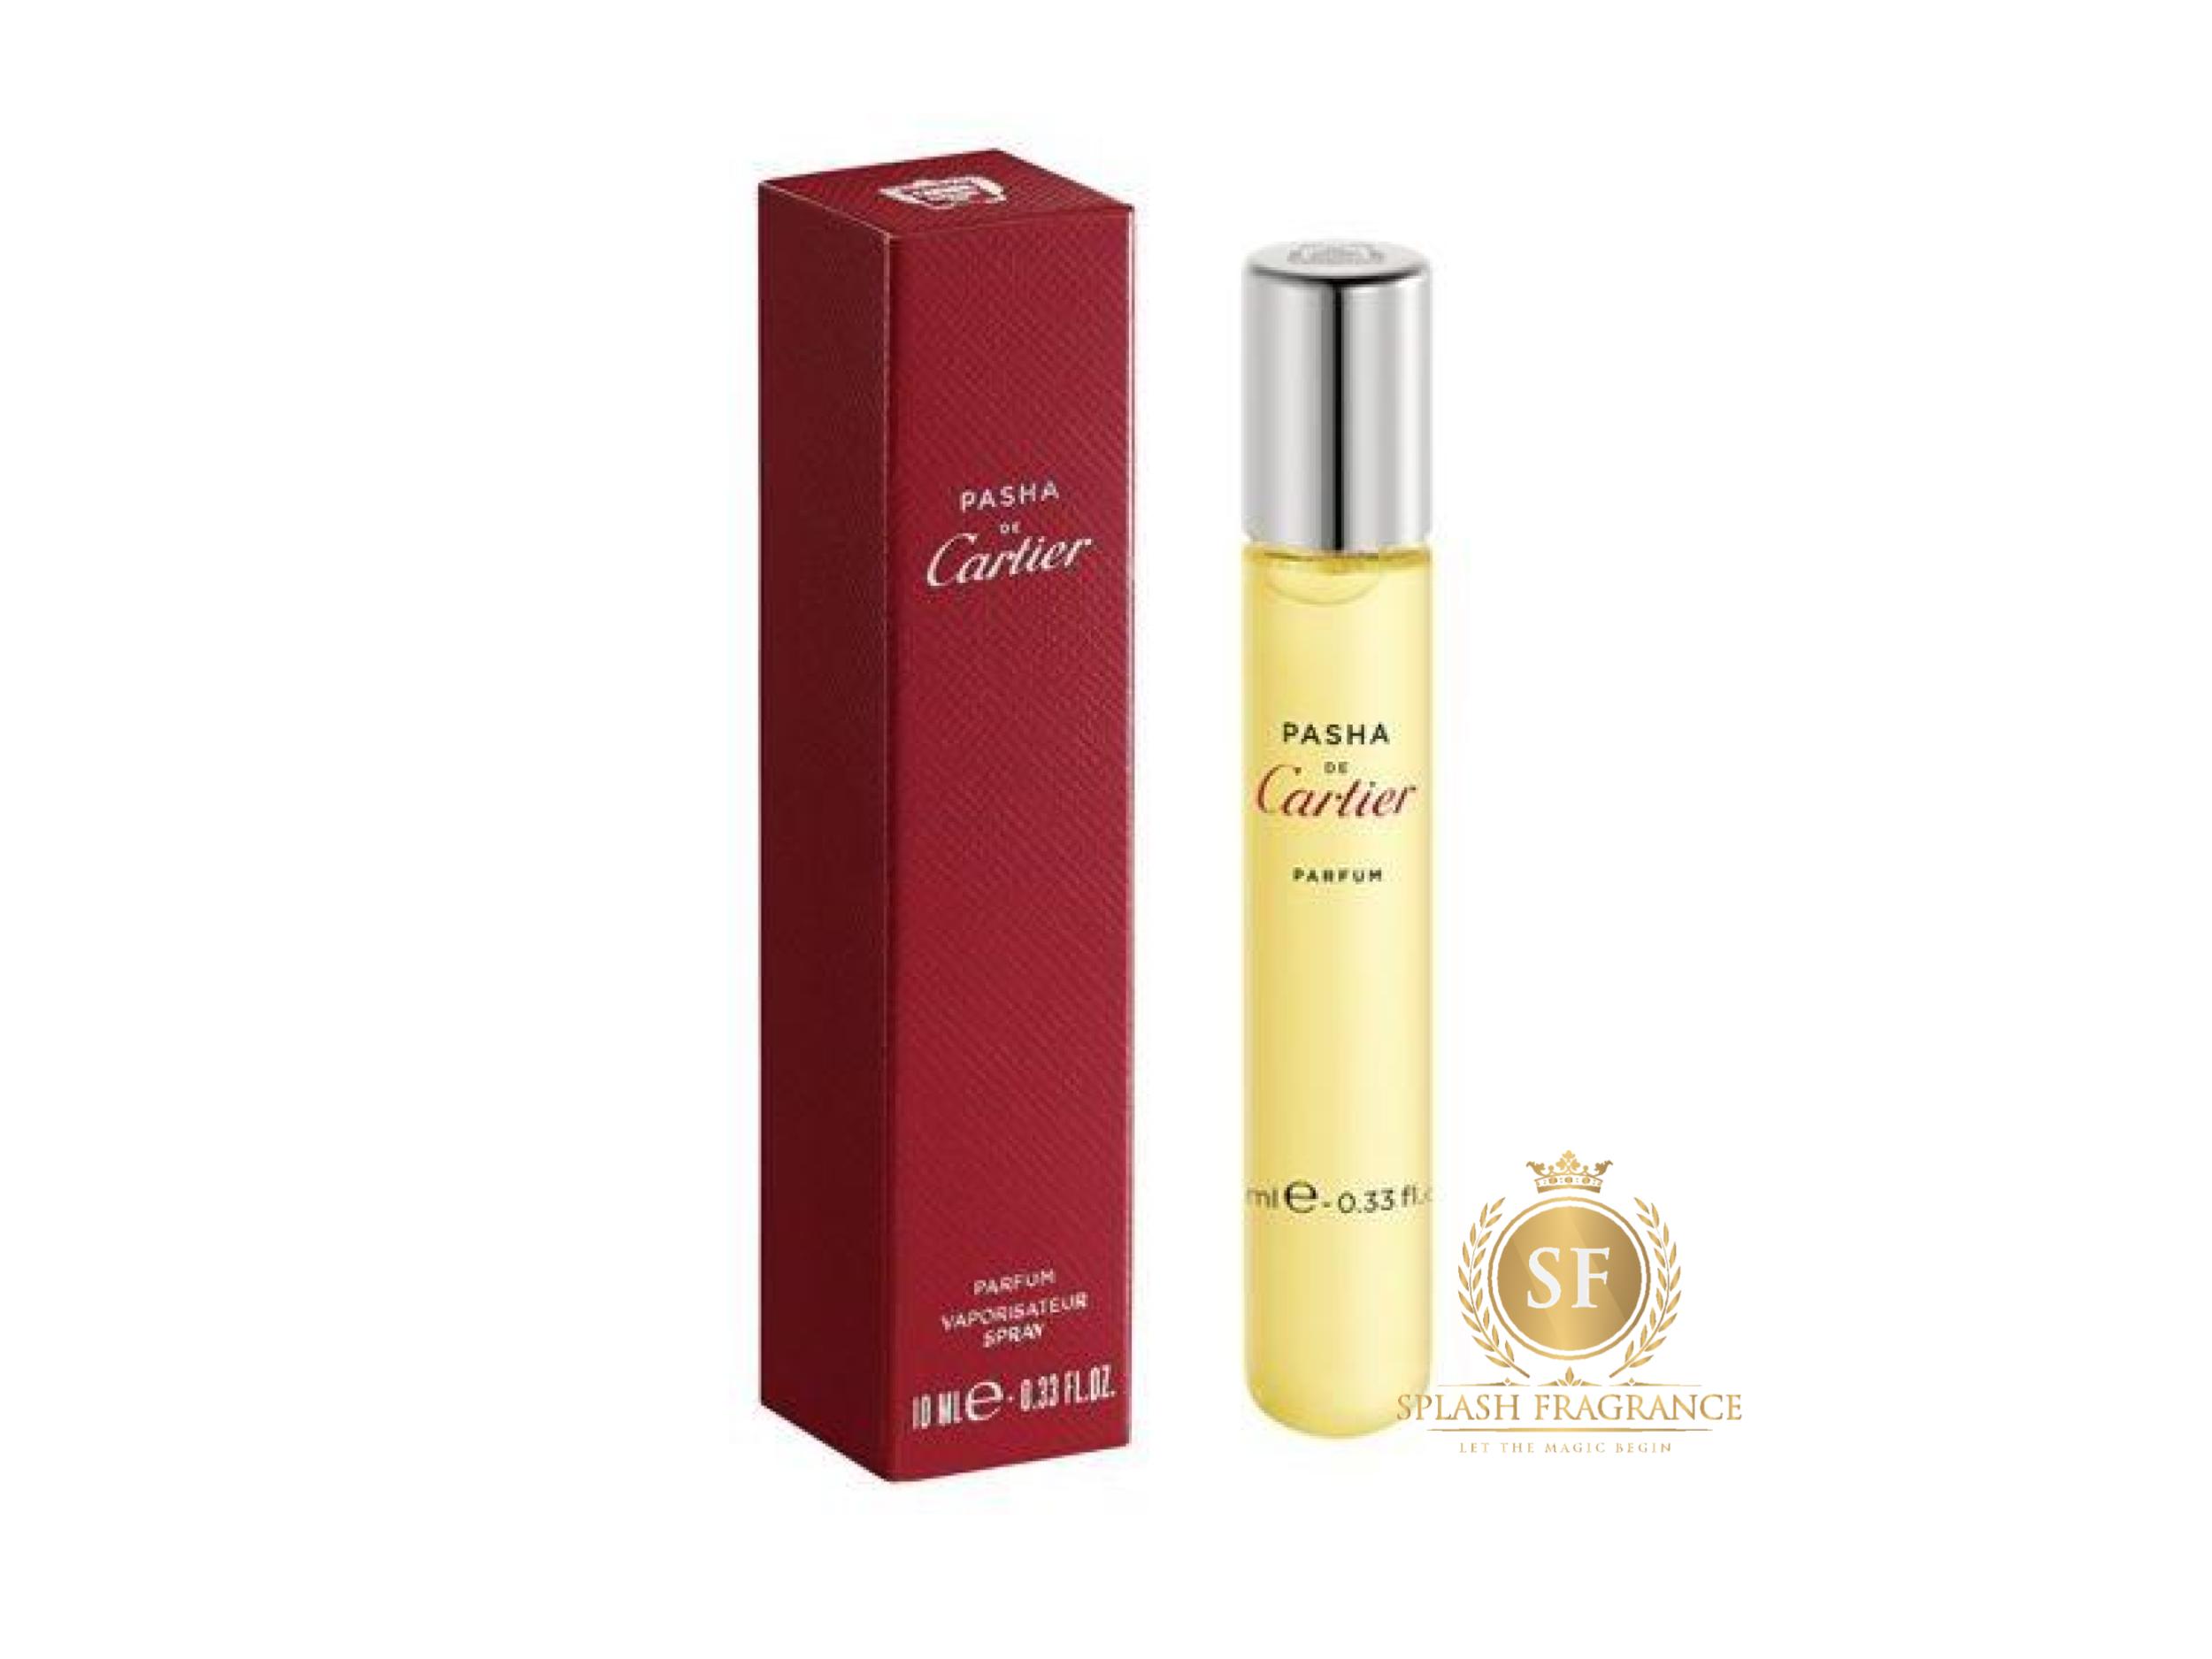 Pasha Parfum By Cartier 10ml Perfume Travel Spray – Splash Fragrance